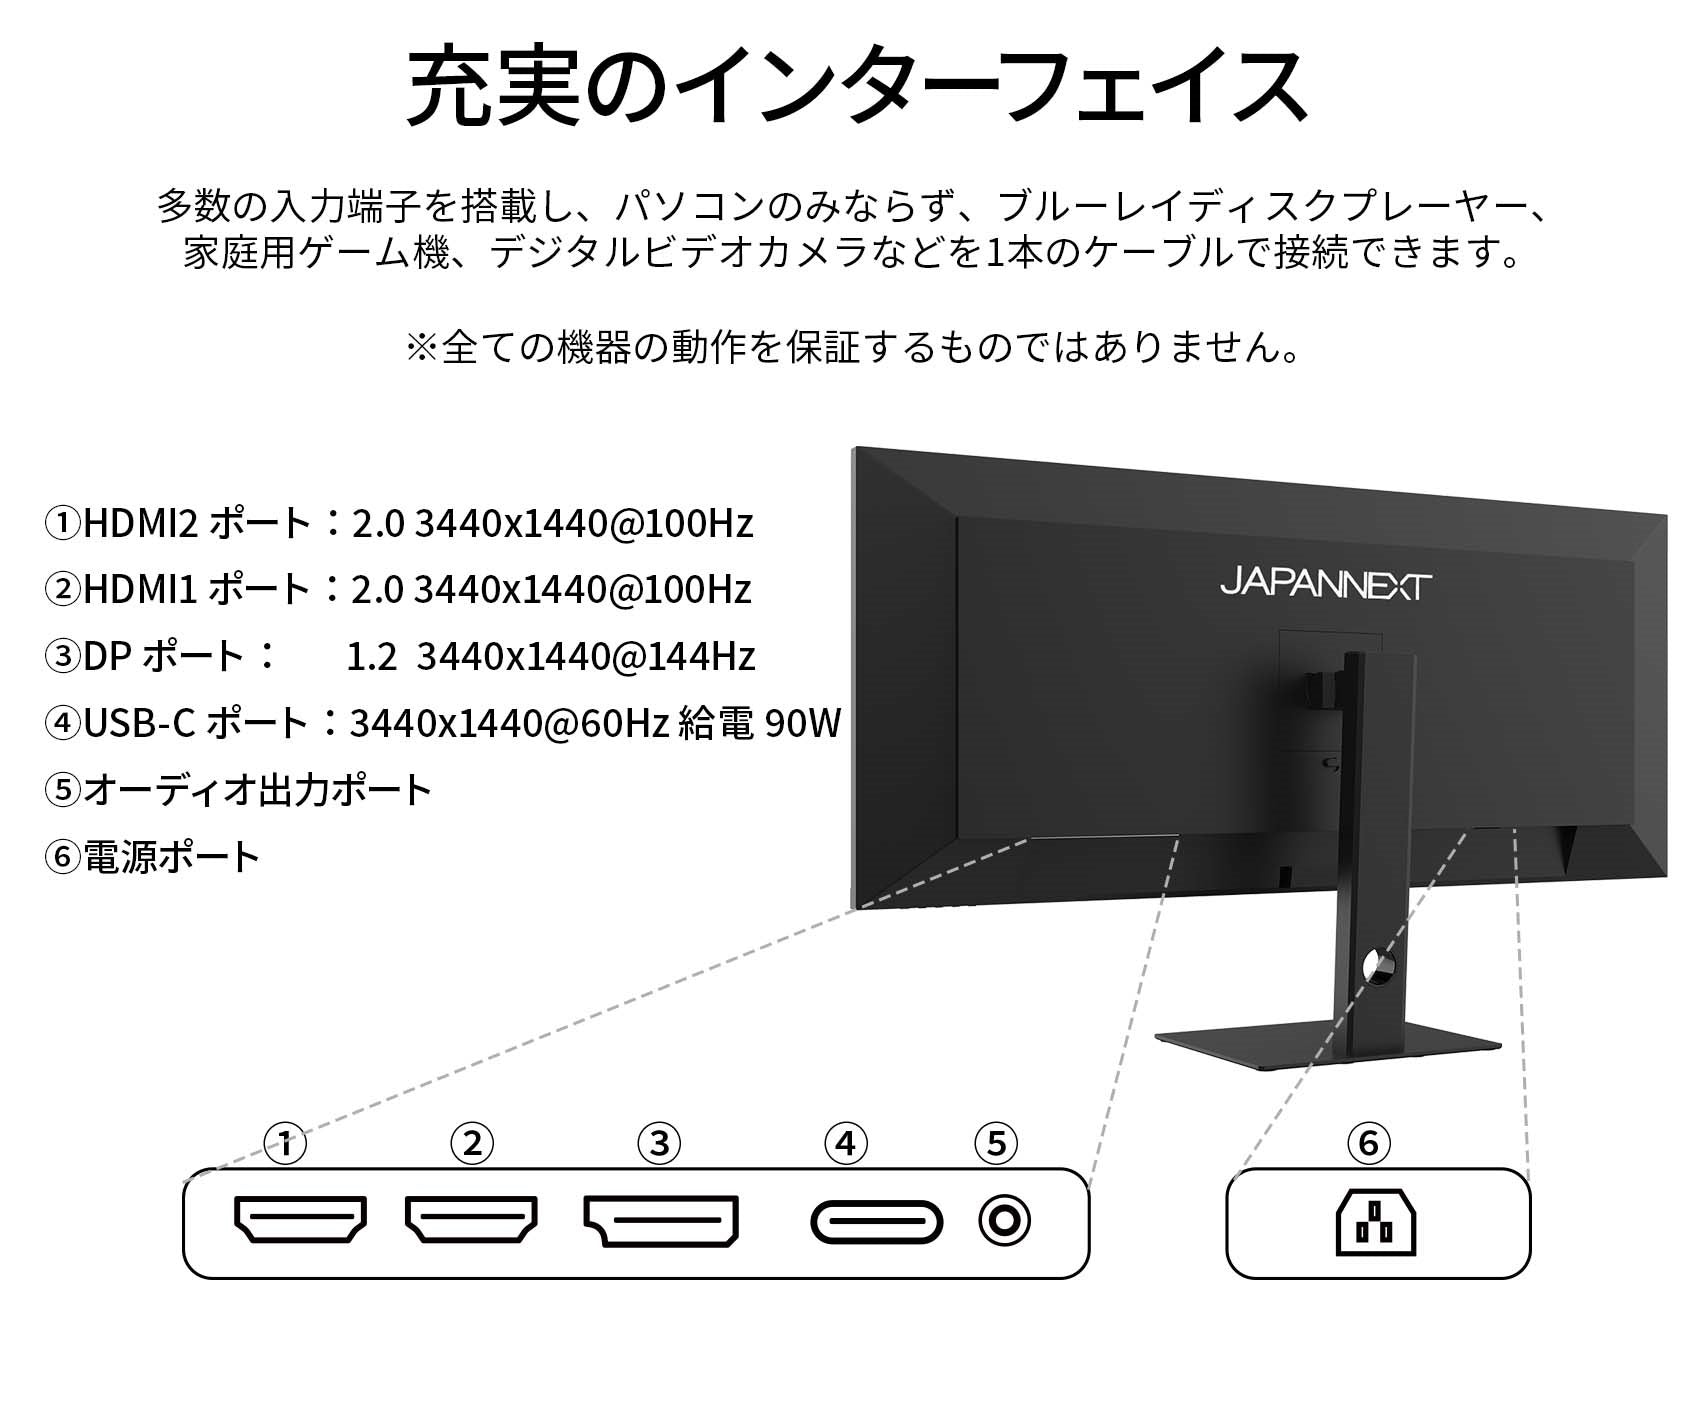 JAPANNEXT 40インチ IPS系パネル UWQHD解像度（3440x1440）対応、144Hz 